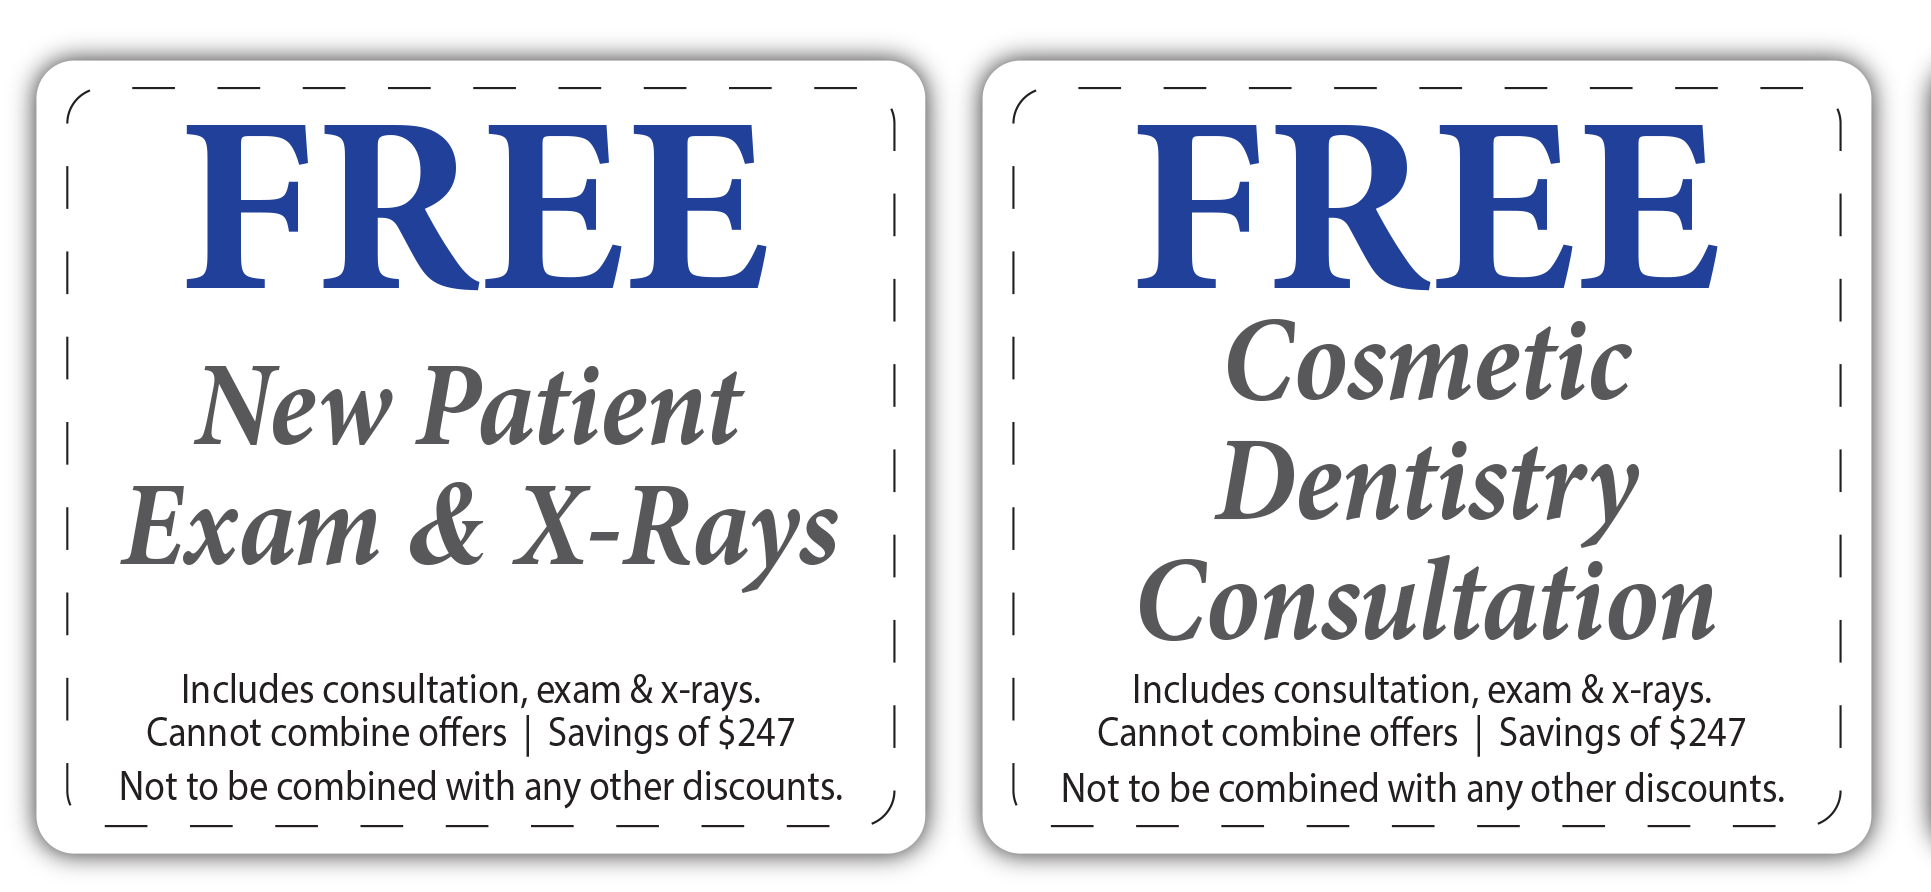 Free Cosmetic Dentistry Consultation in Santa Barbara, CA